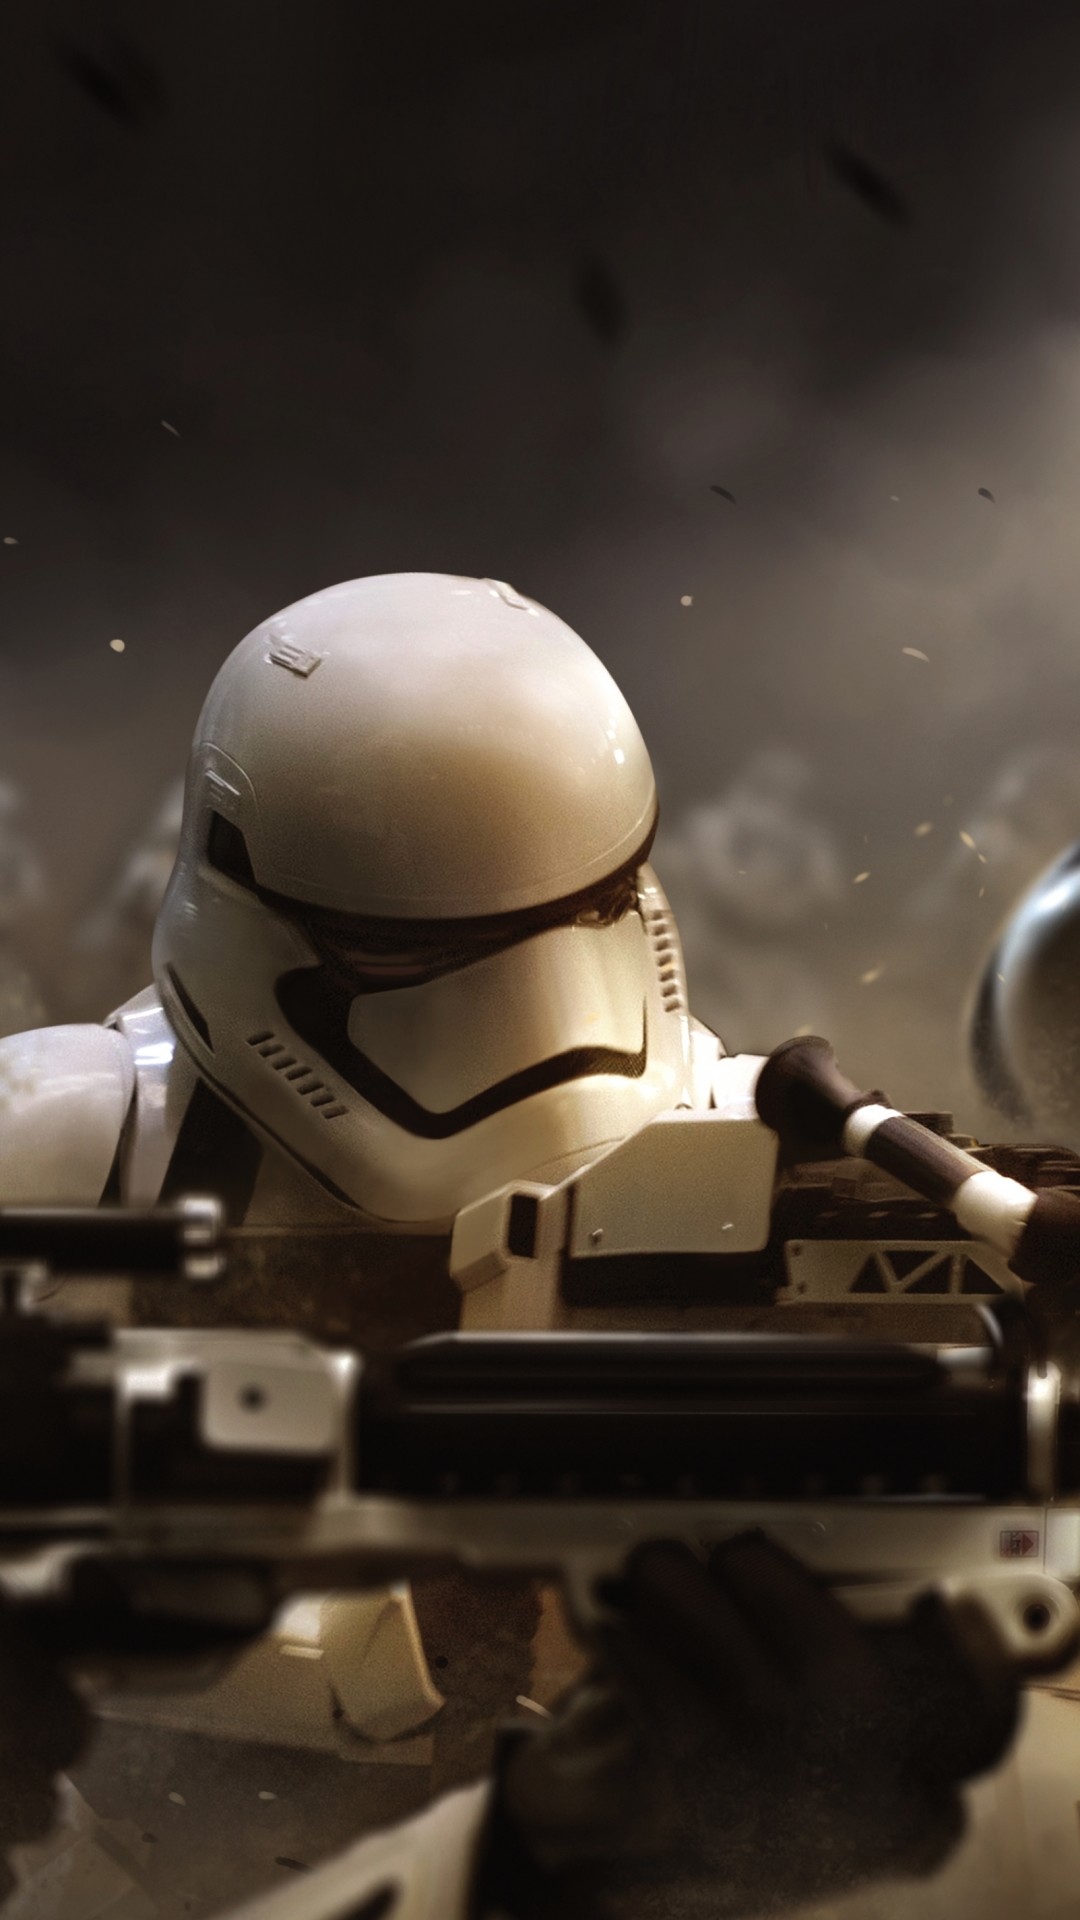 Wallpaper Stormtrooper Offensive. Download iPhone. Star